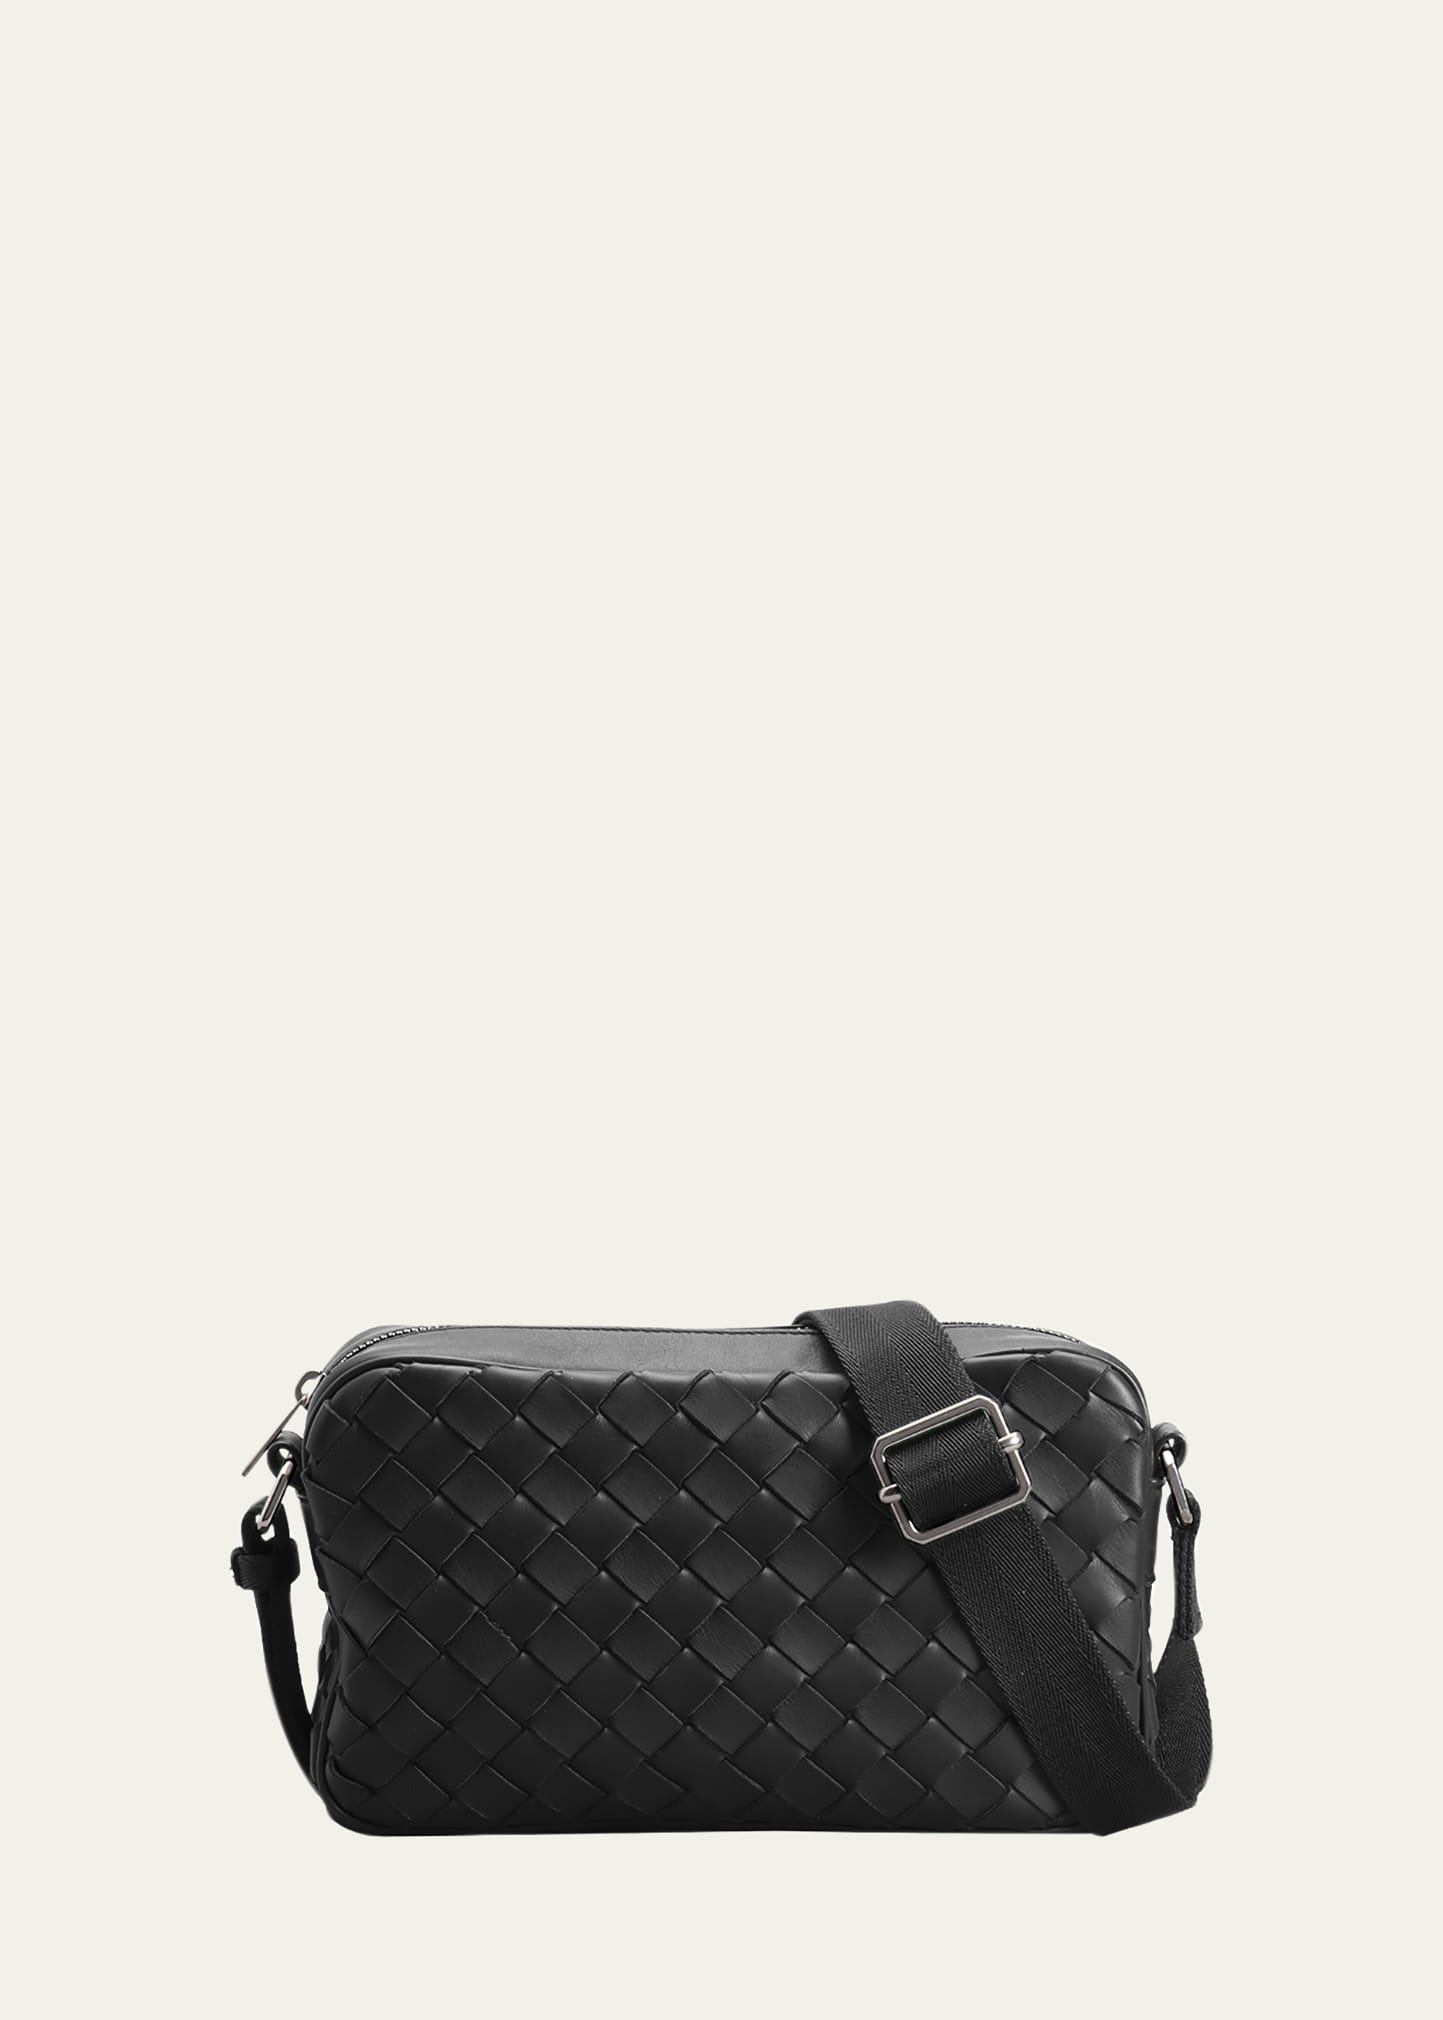 Bottega Veneta Men's Intrecciato Leather Crossbody Bag